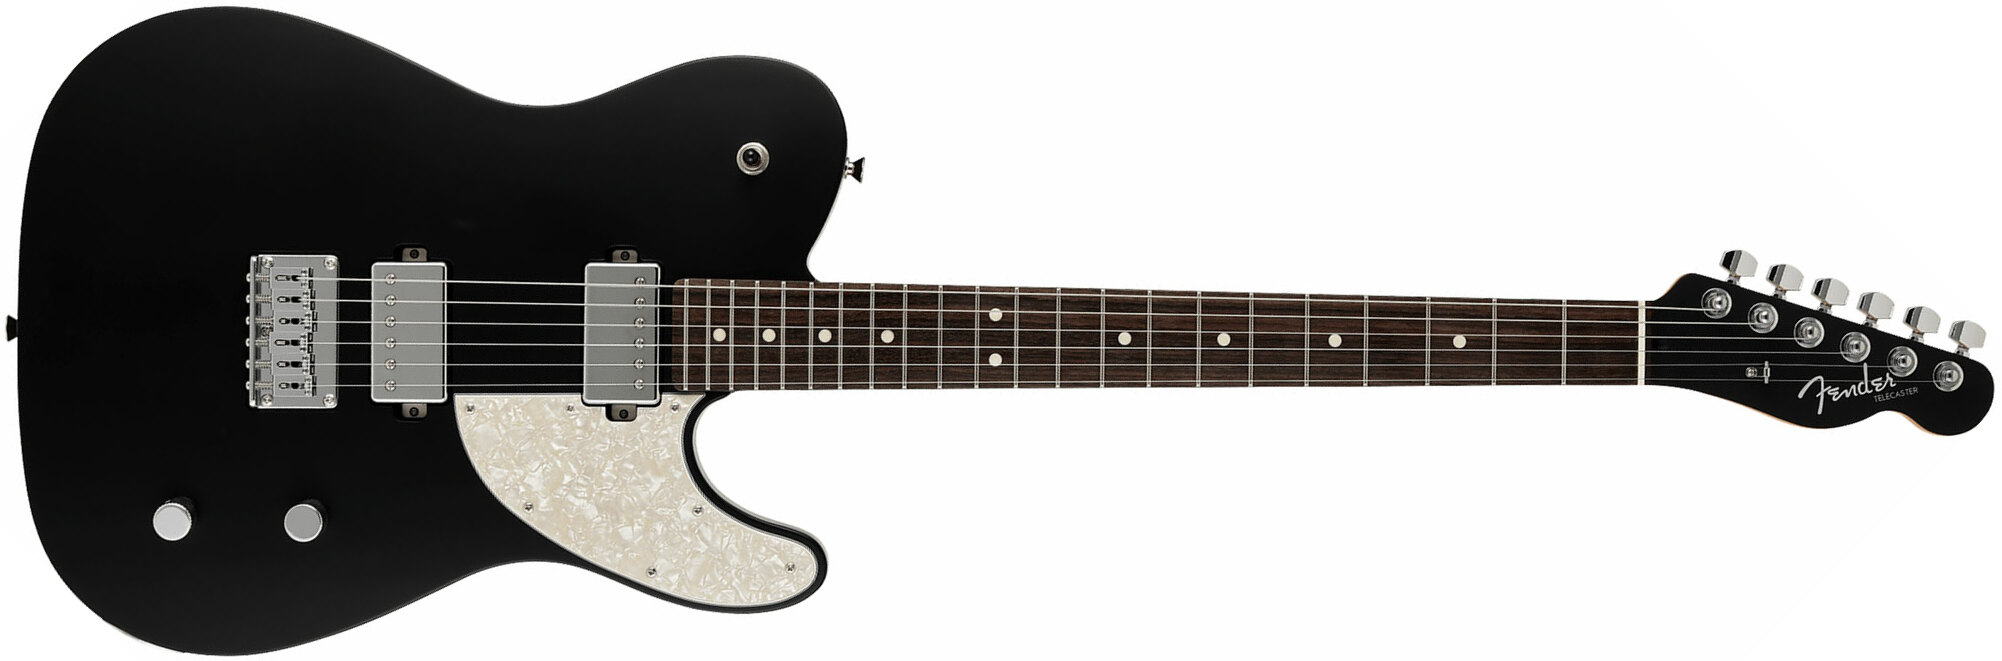 Fender Tele Elemental Mij Jap 2h Ht Rw - Stone Black - Televorm elektrische gitaar - Main picture